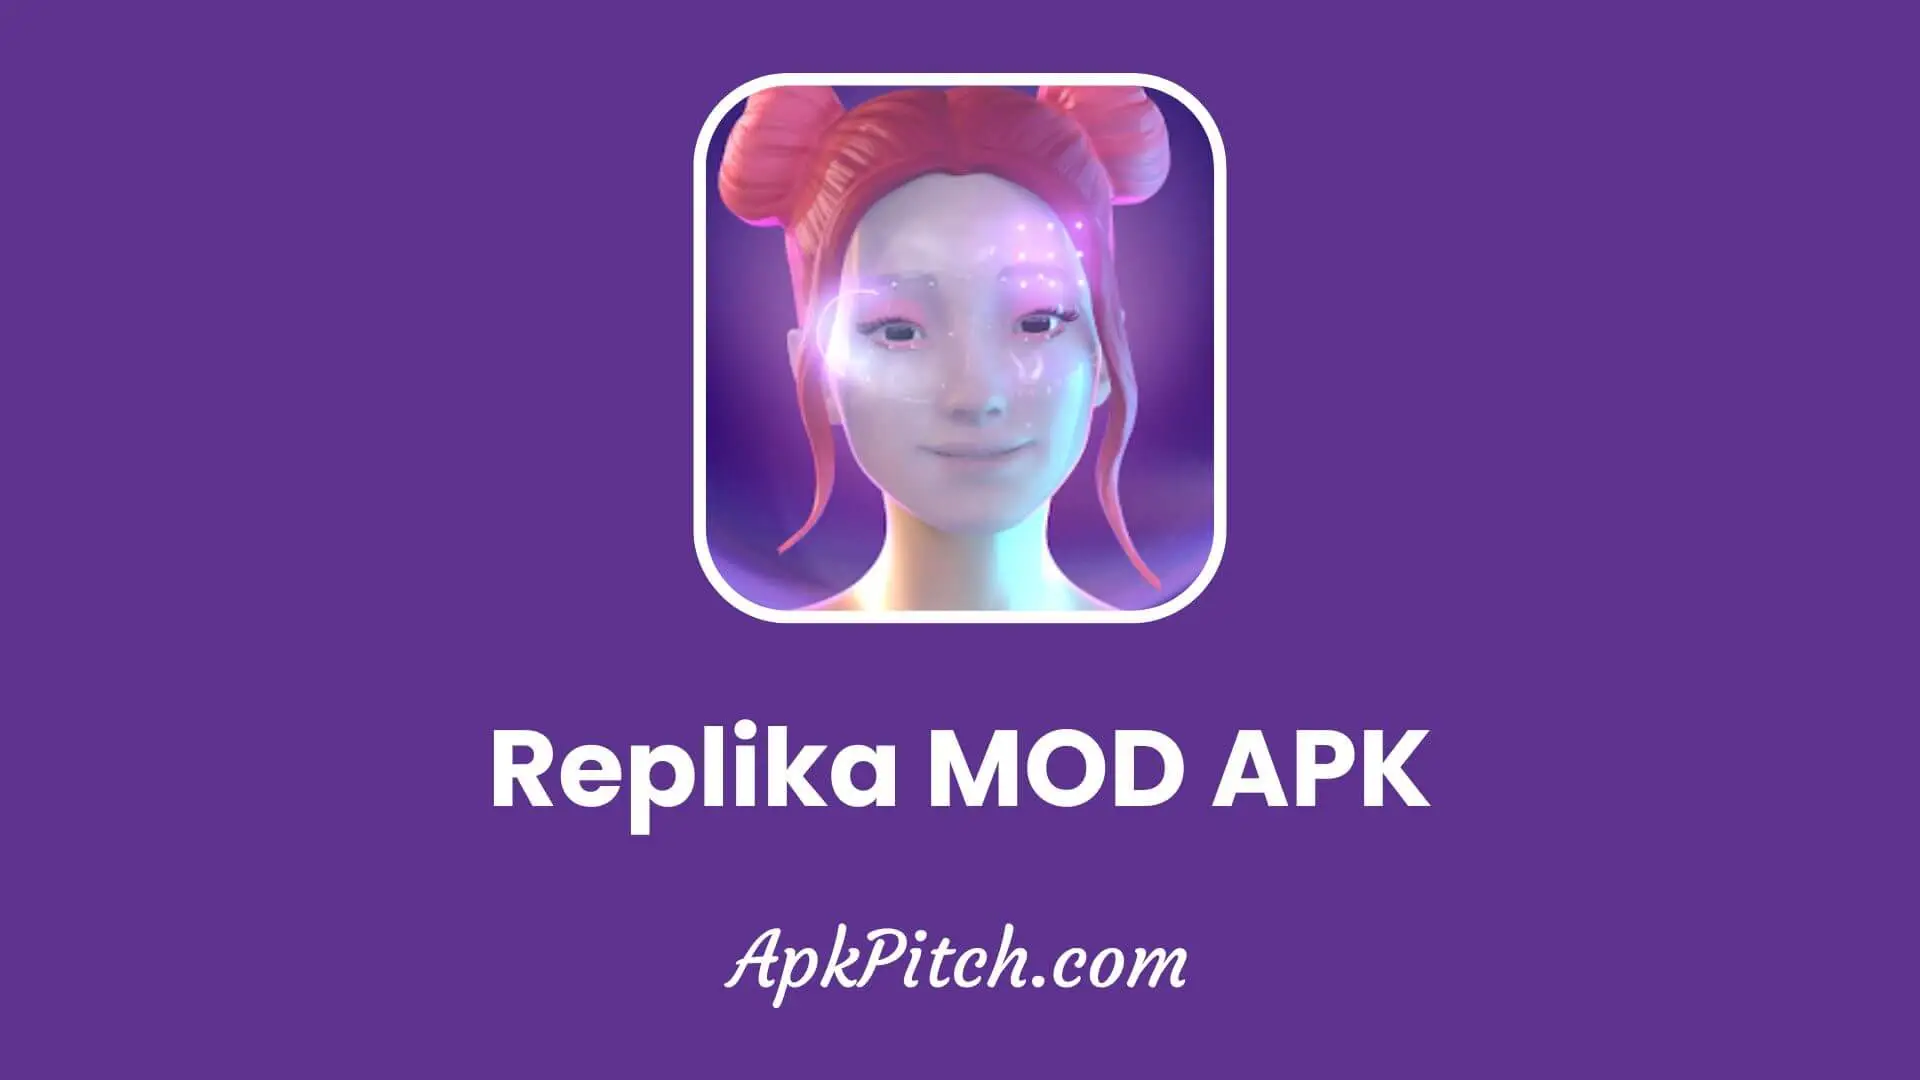 Replika MOD APK Download